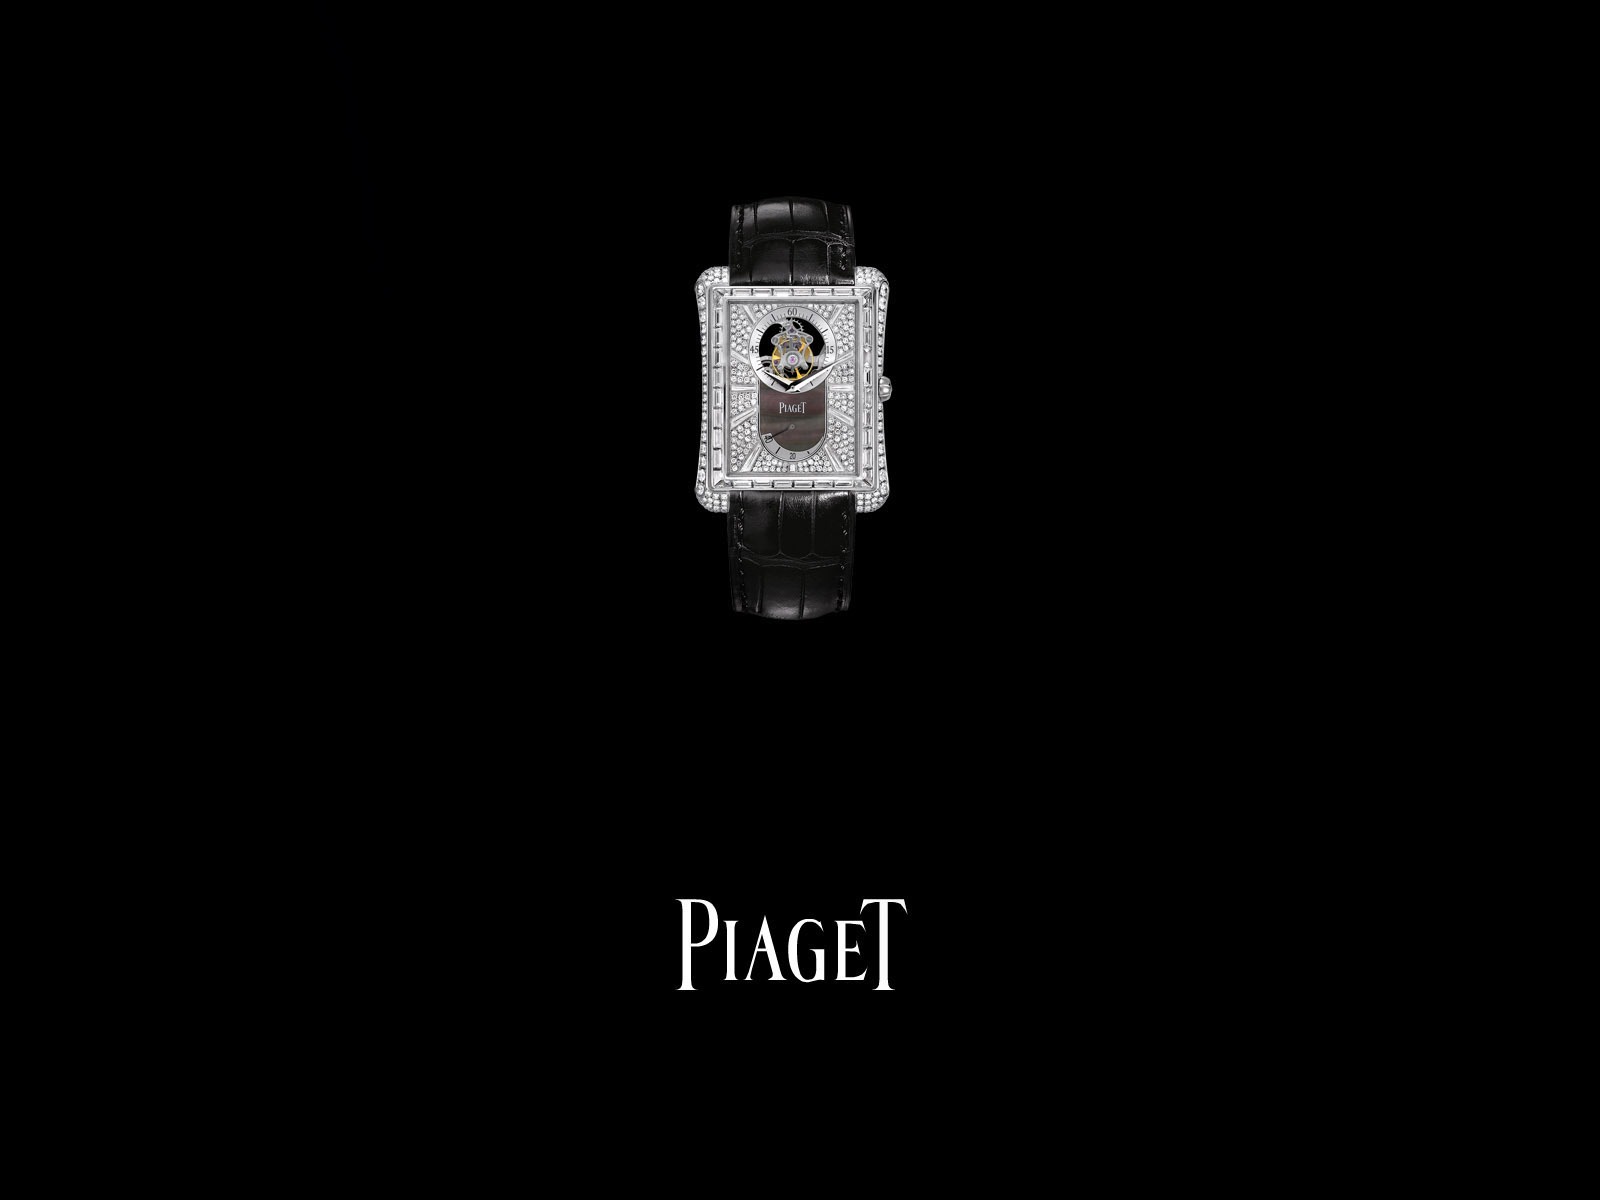 Piaget Diamond Watch Wallpaper (3) #15 - 1600x1200